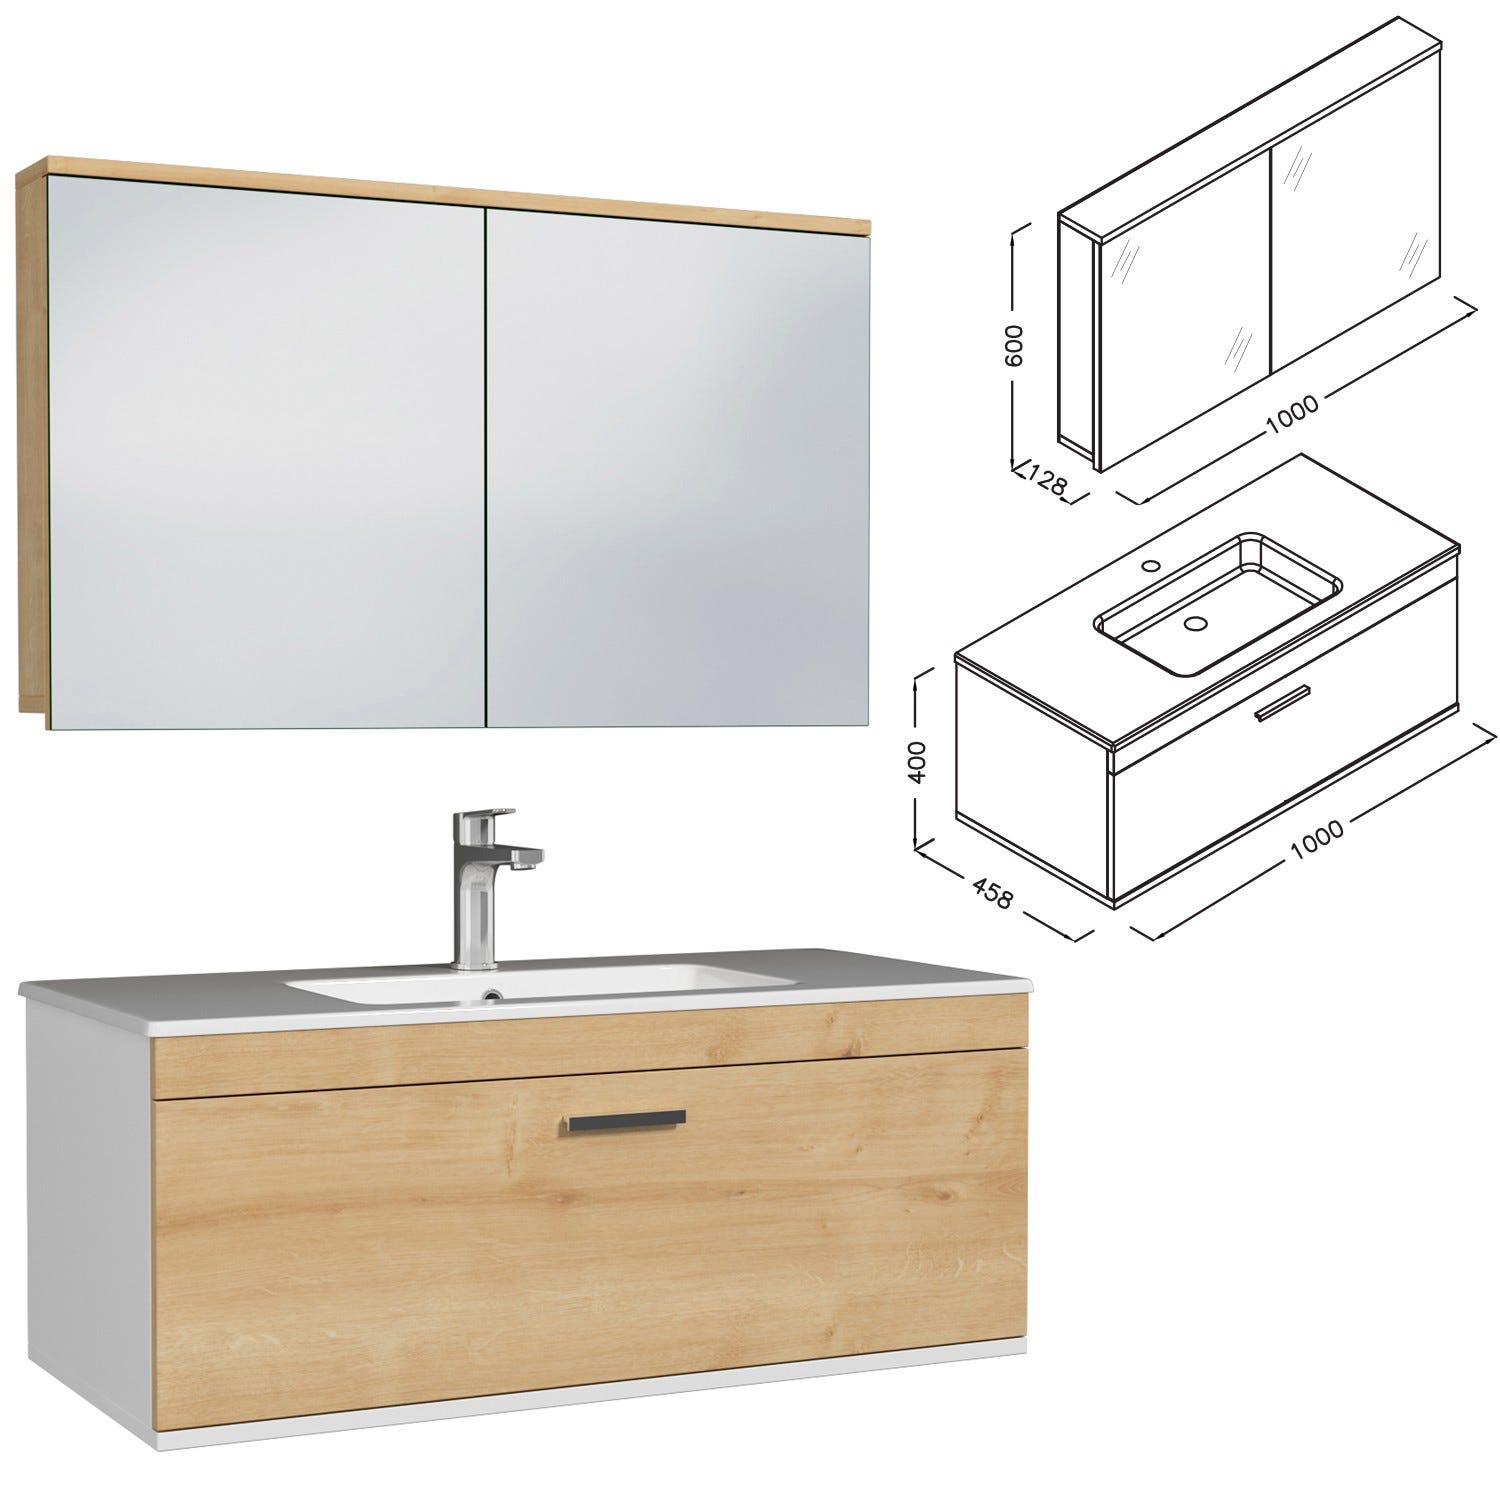 RUBITE Meuble salle de bain simple vasque 1 tiroir chêne clair largeur 100 cm + miroir armoire 2